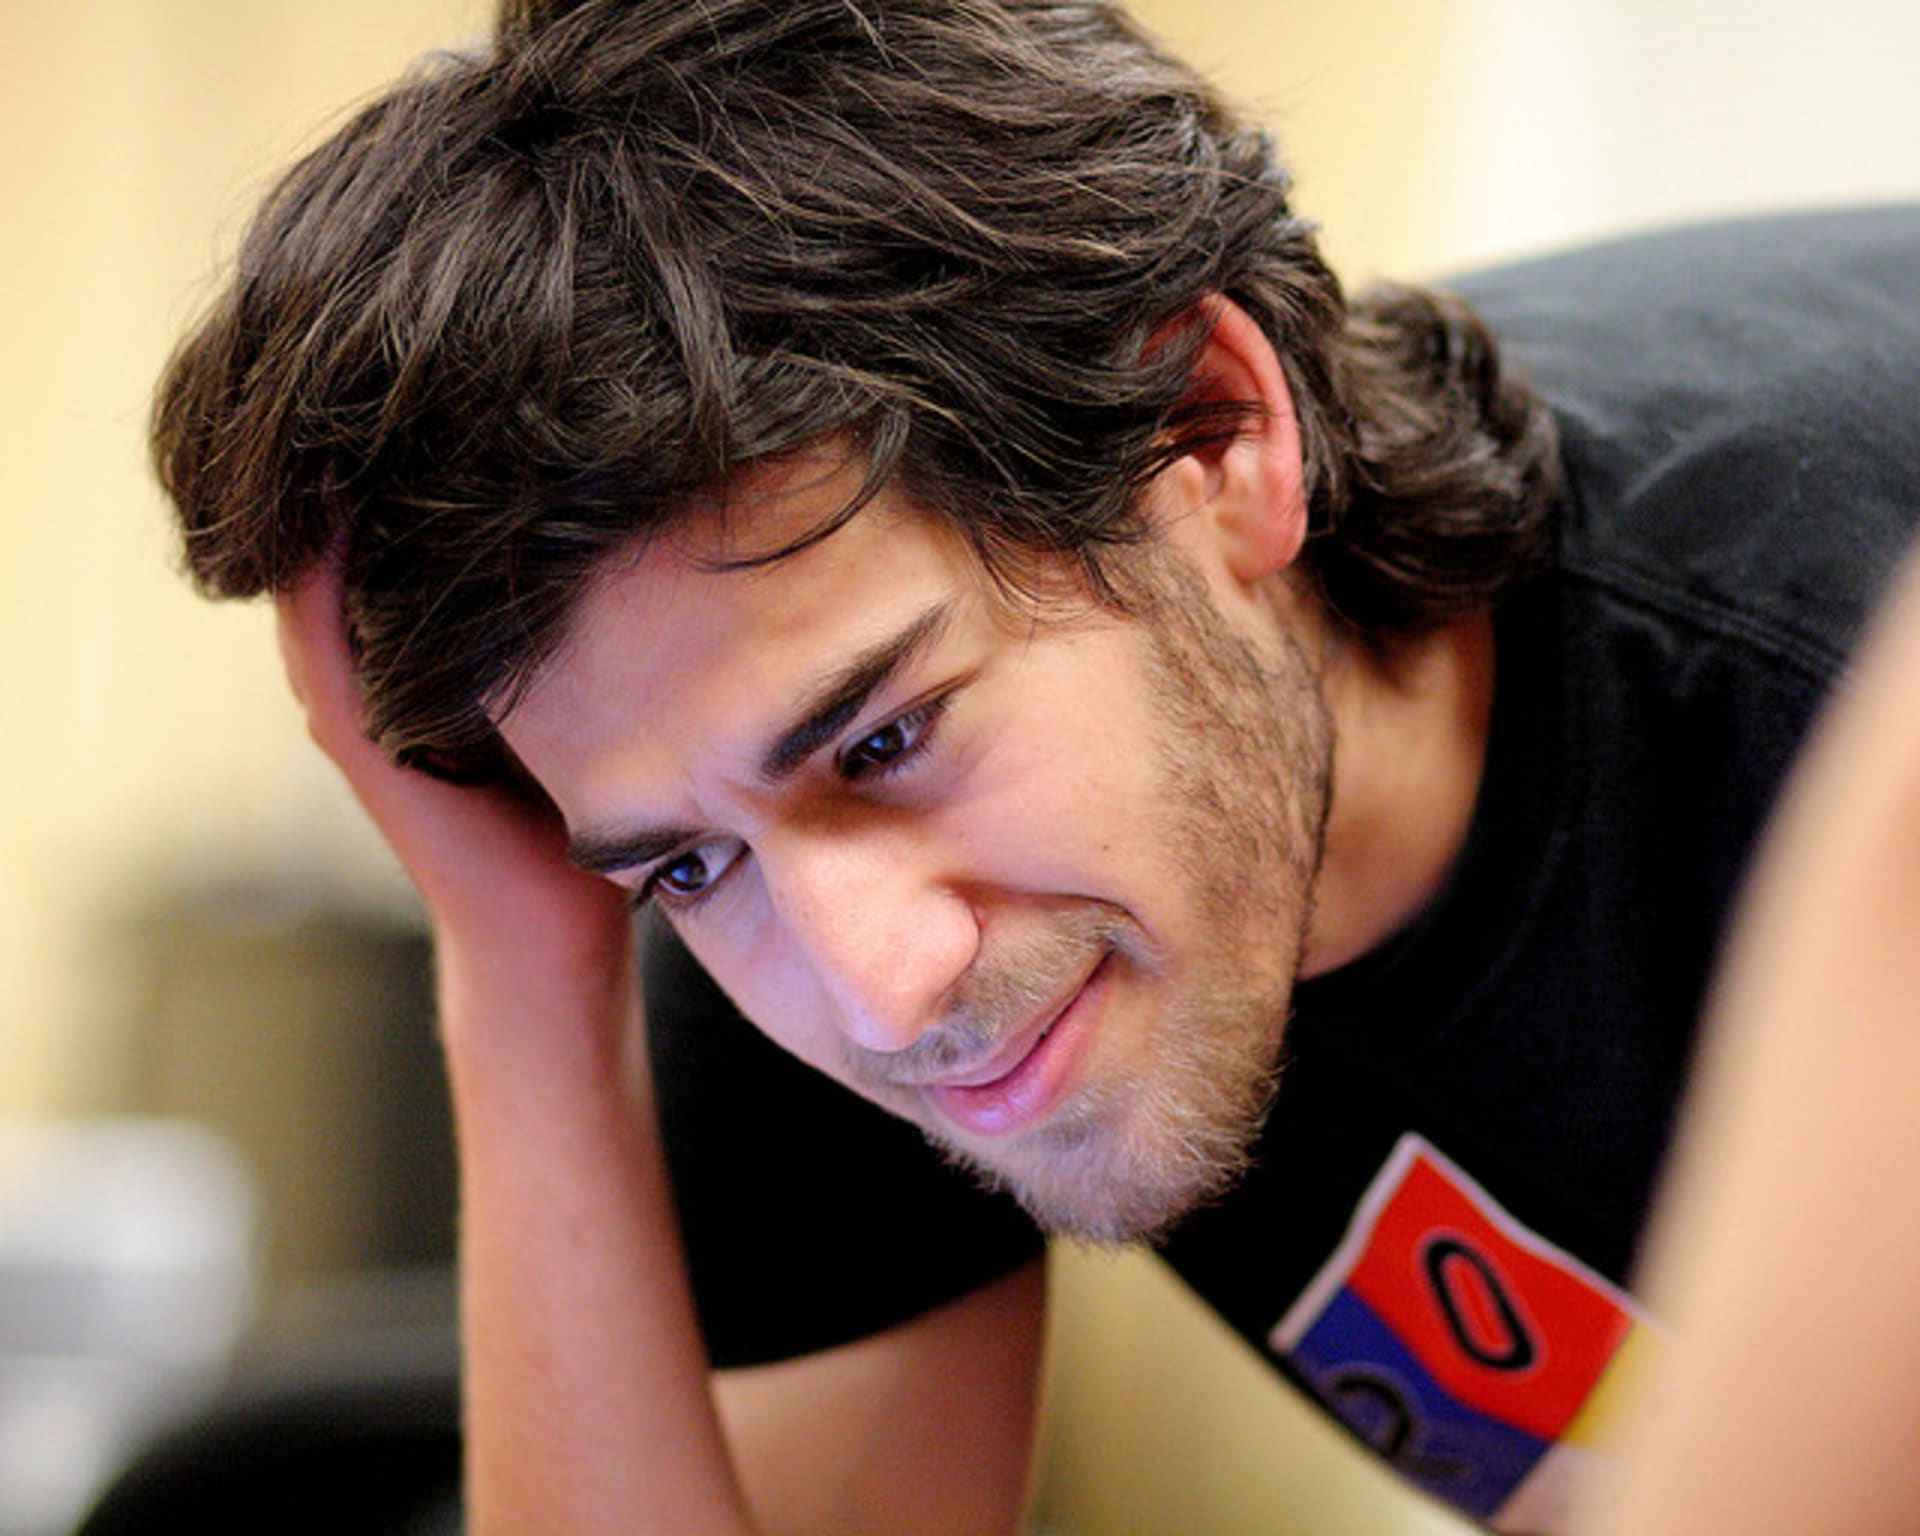 Aaron Swartz, Internet Activist, Reddit Cofounder, RSS Co-Author, Dead At 26